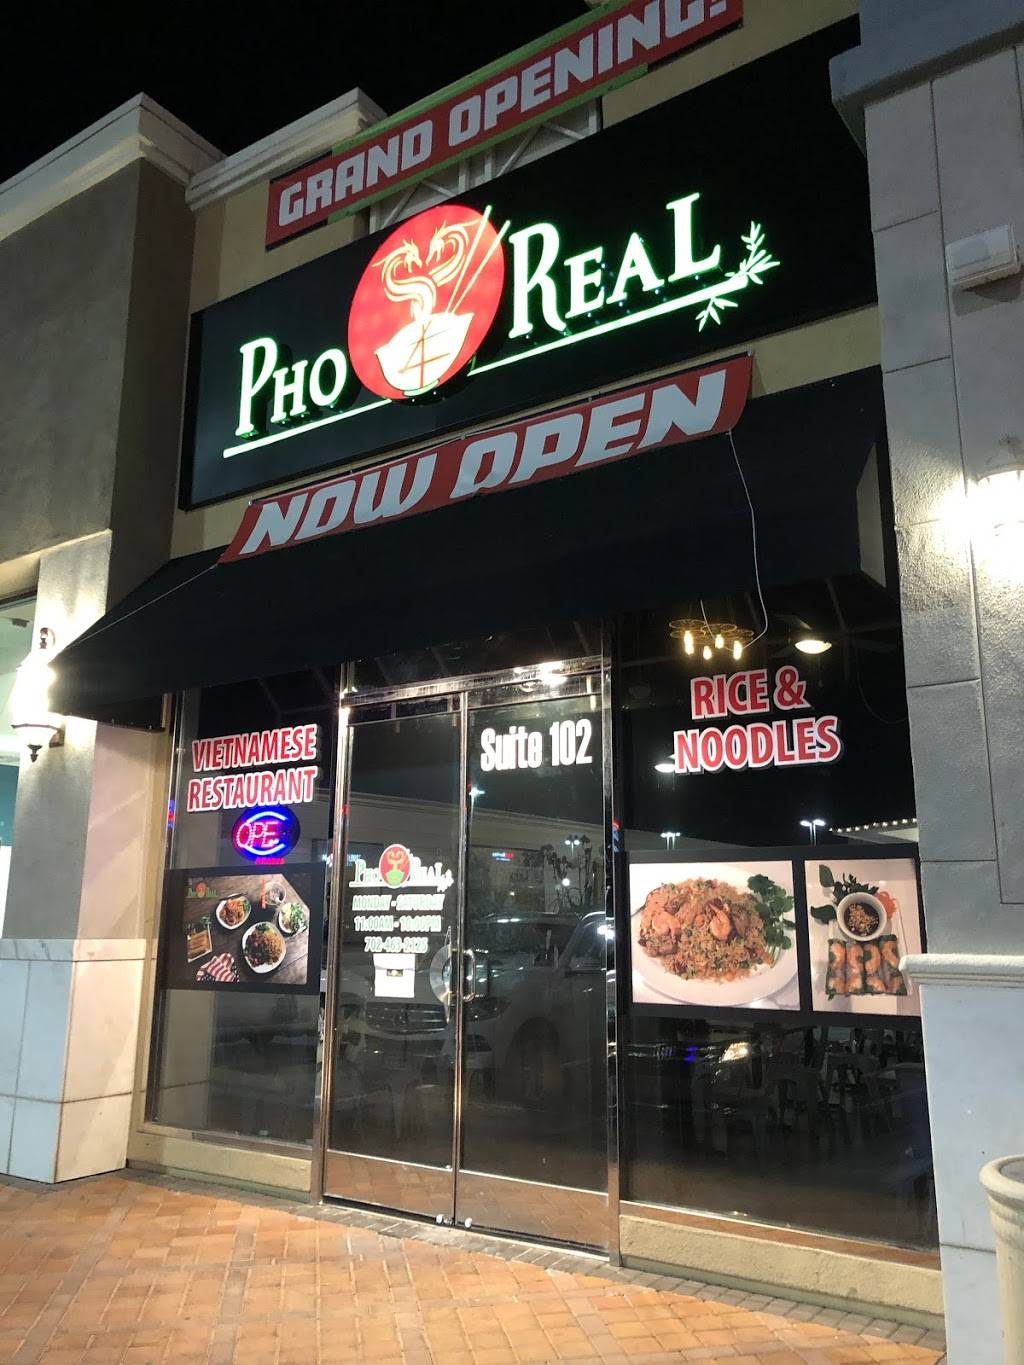 Pho Real Vietnamese Restaurant | restaurant | 4145 S Grand Canyon Dr Suite #102, Las Vegas, NV 89147, USA | 7024632125 OR +1 702-463-2125